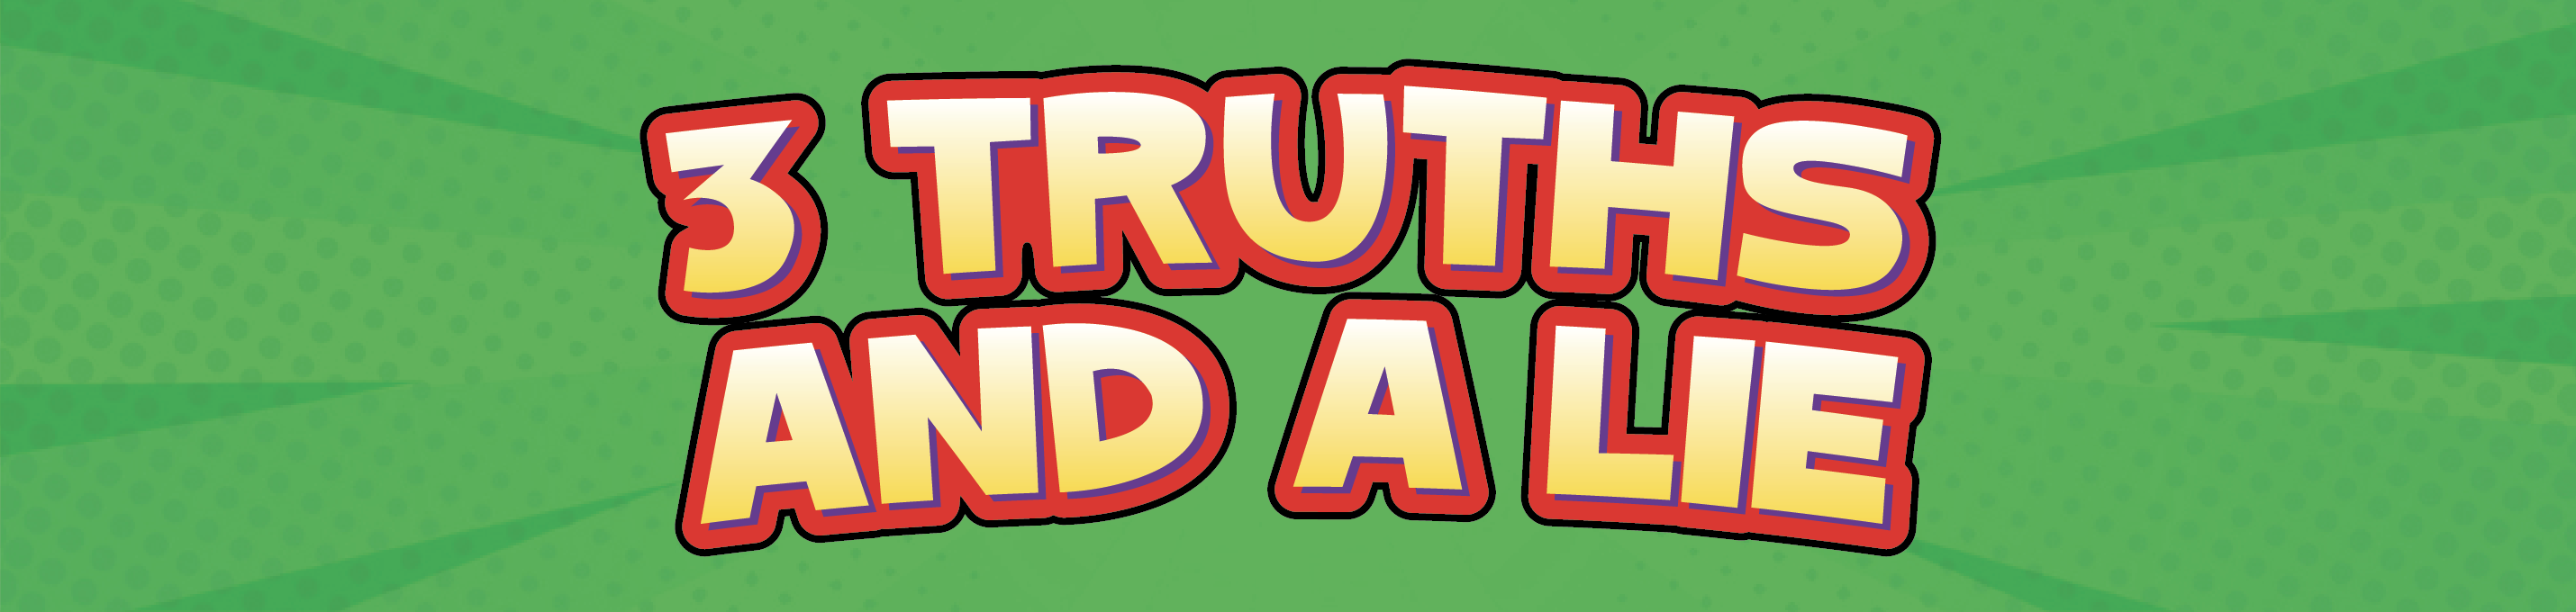 3-truths-and-a-lie